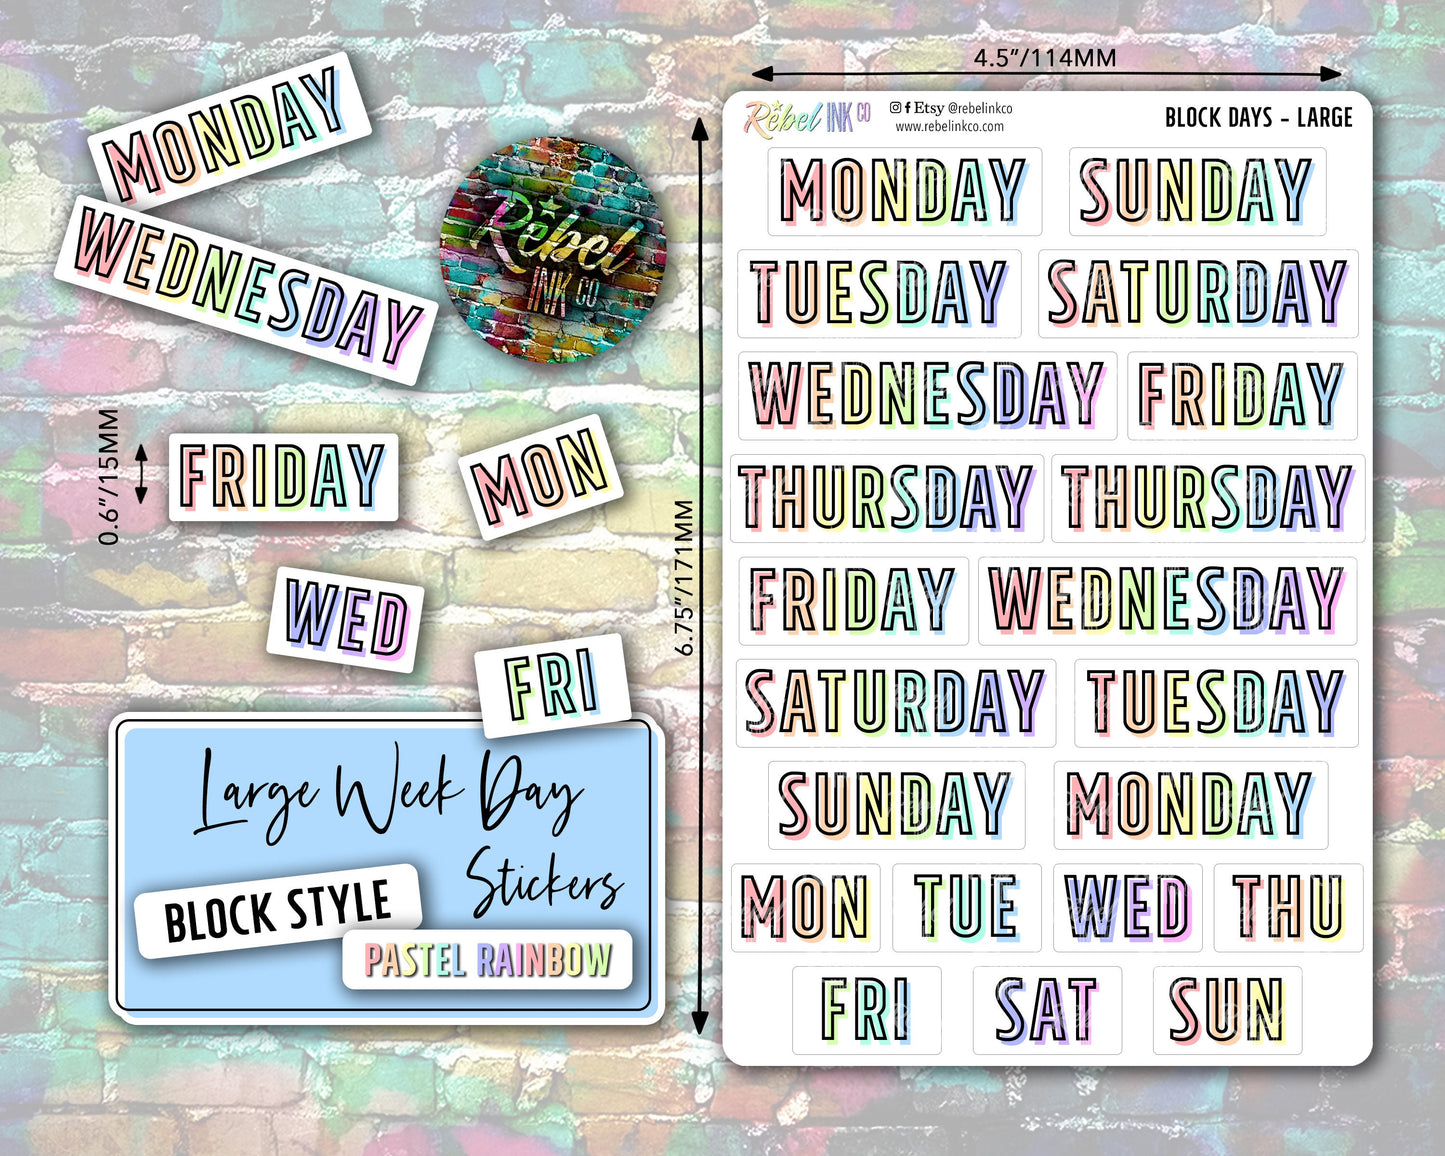 Week Day Stickers - Large - Pastel Rainbow - Block Style